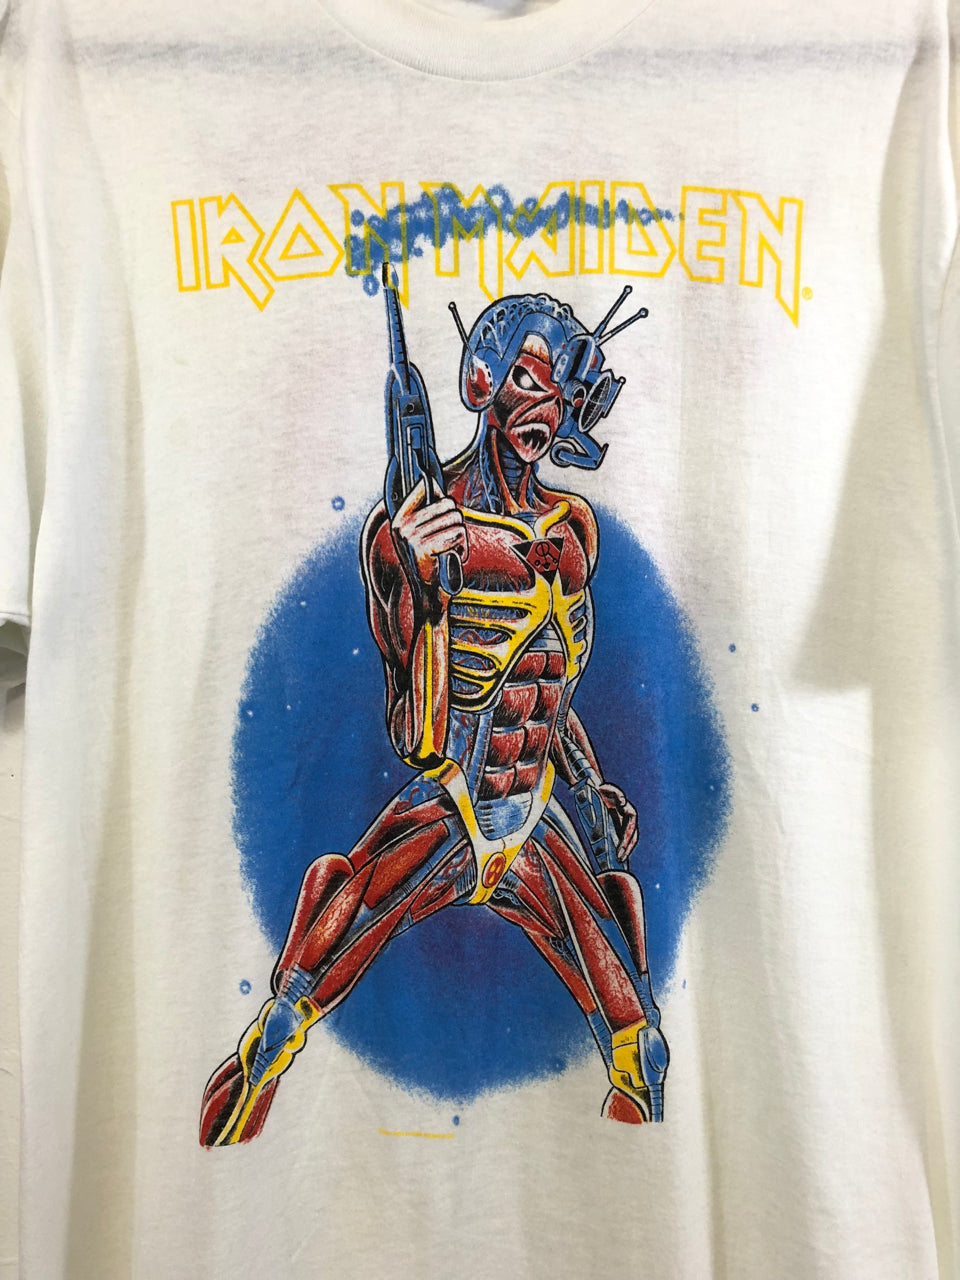 Iron Maiden Local Krew '87 T-Shirt